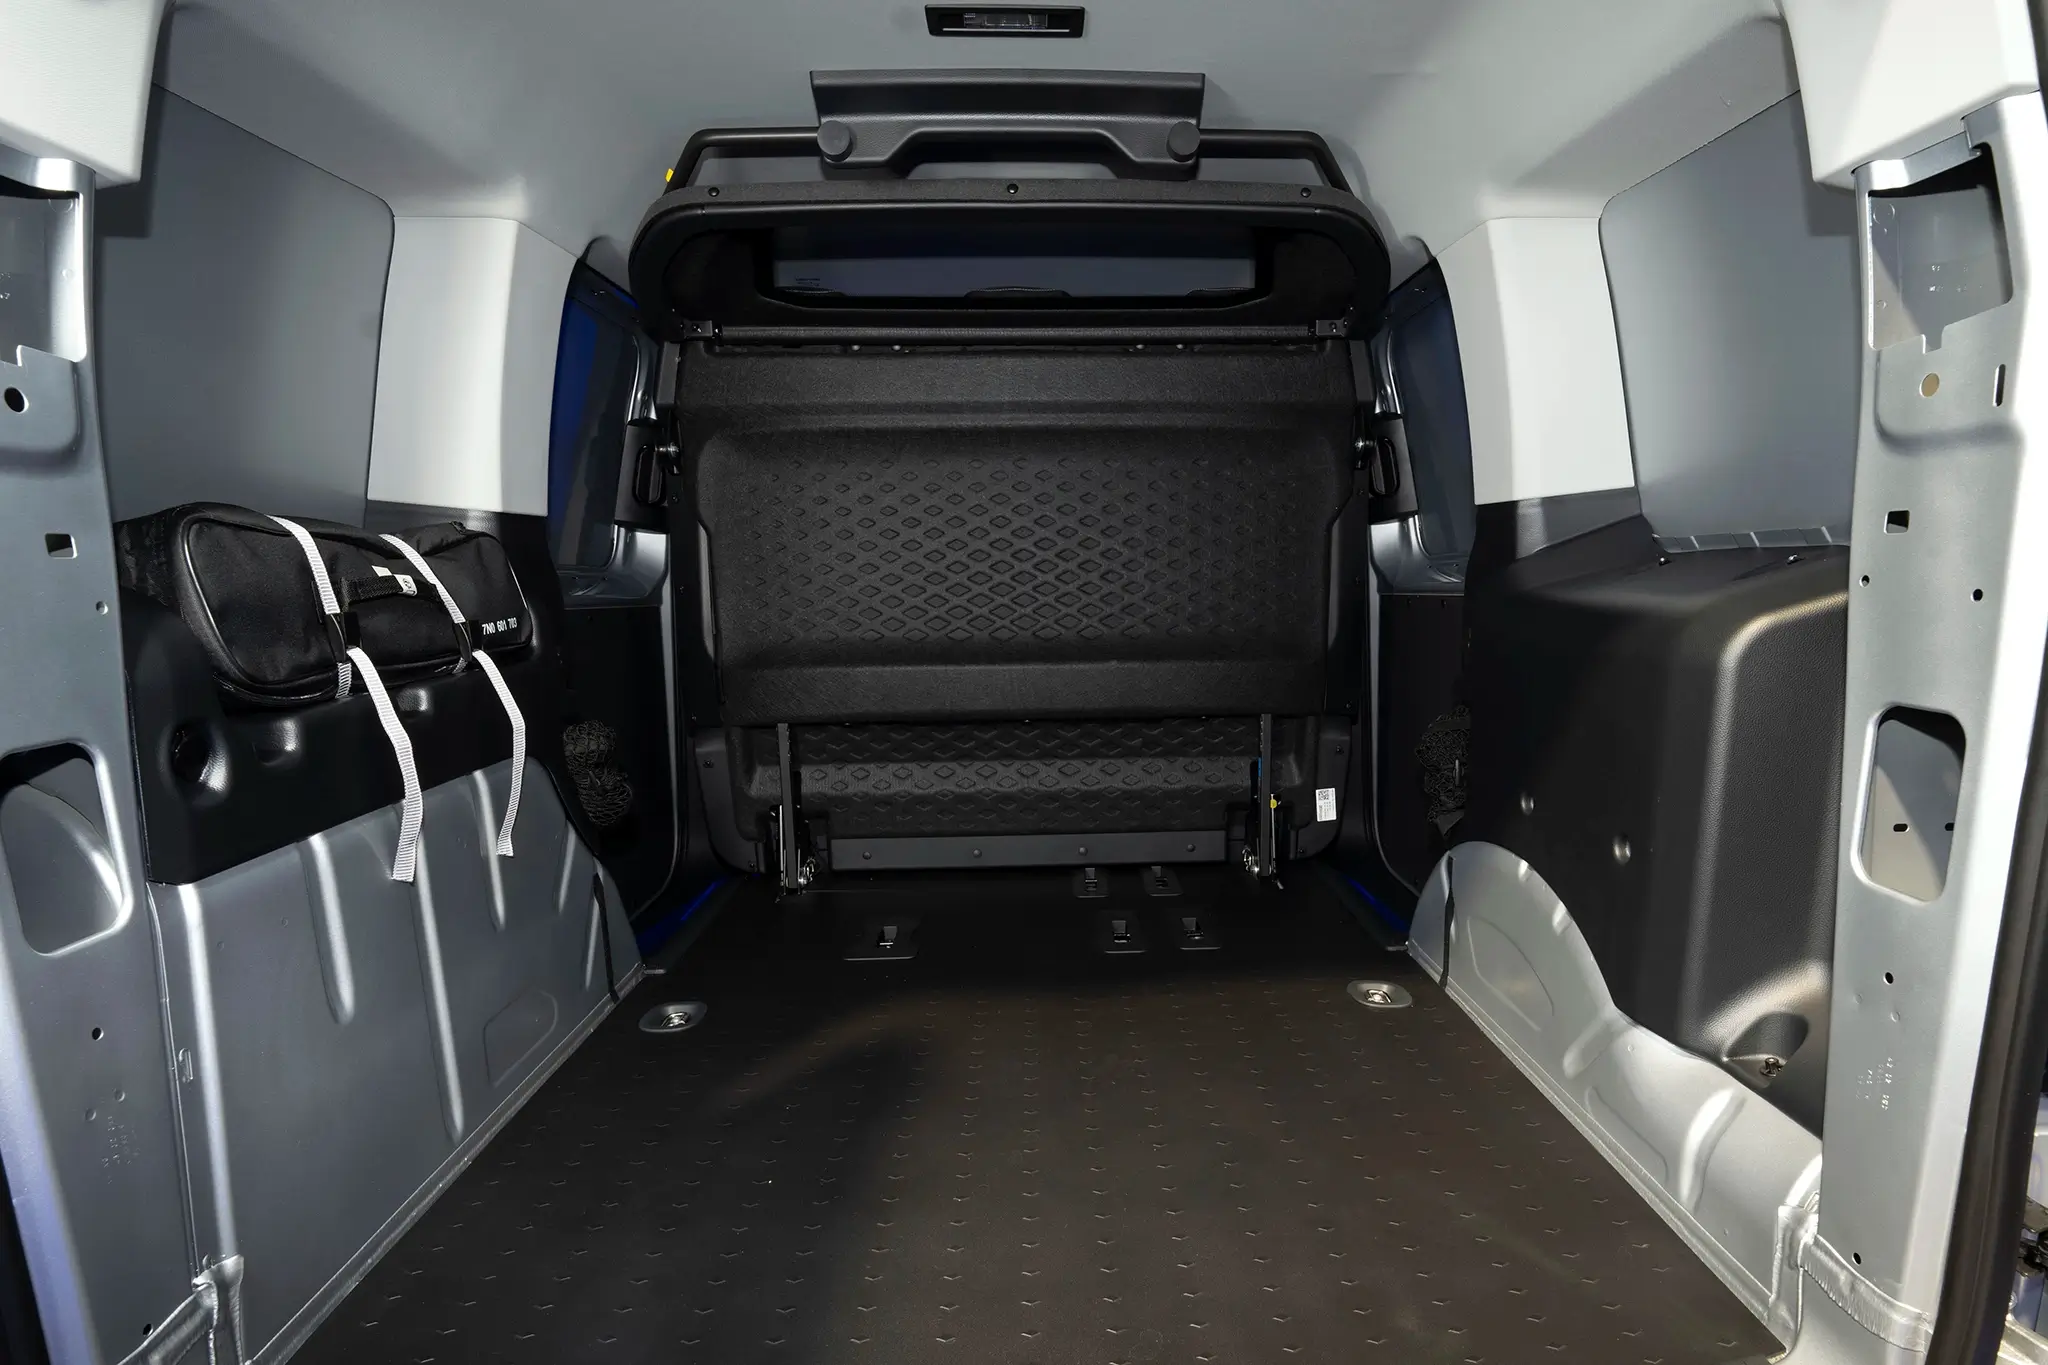 Ford Transit Connect - Segunda fila de assentos no compartimento de carga